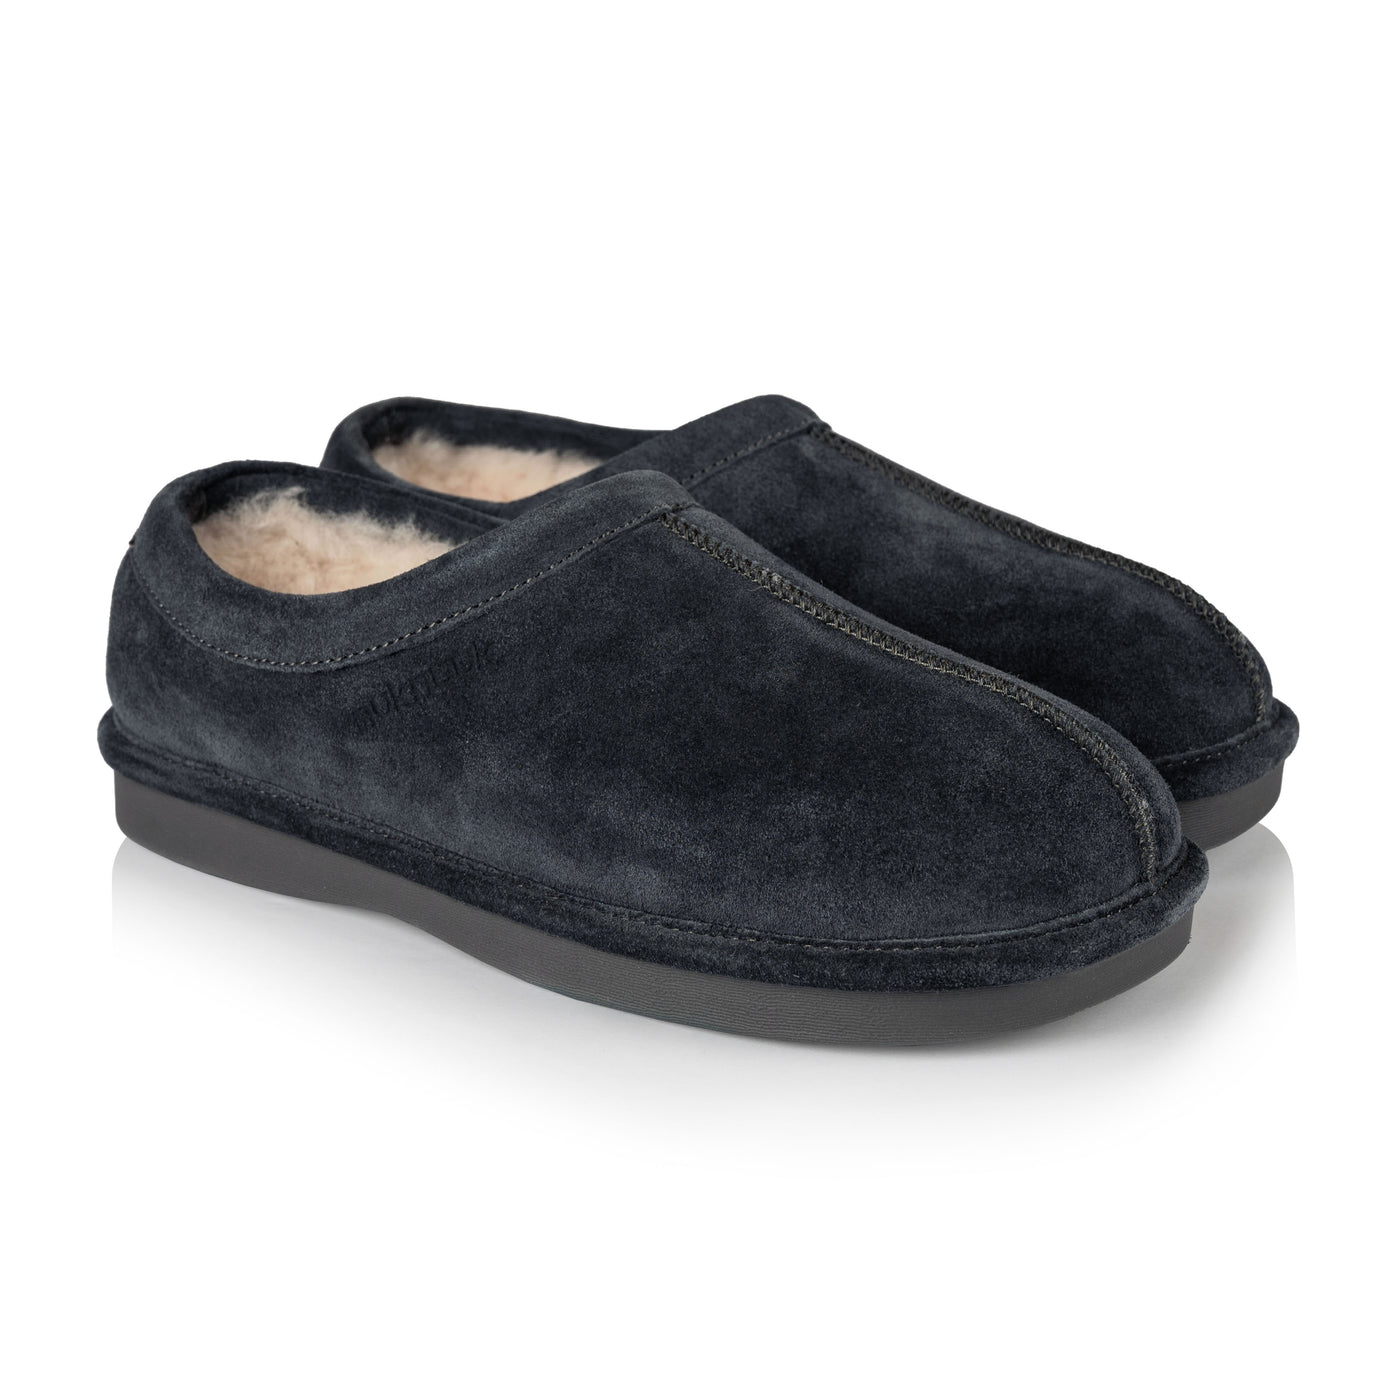 Thomas men’s slipper (Charcoal)